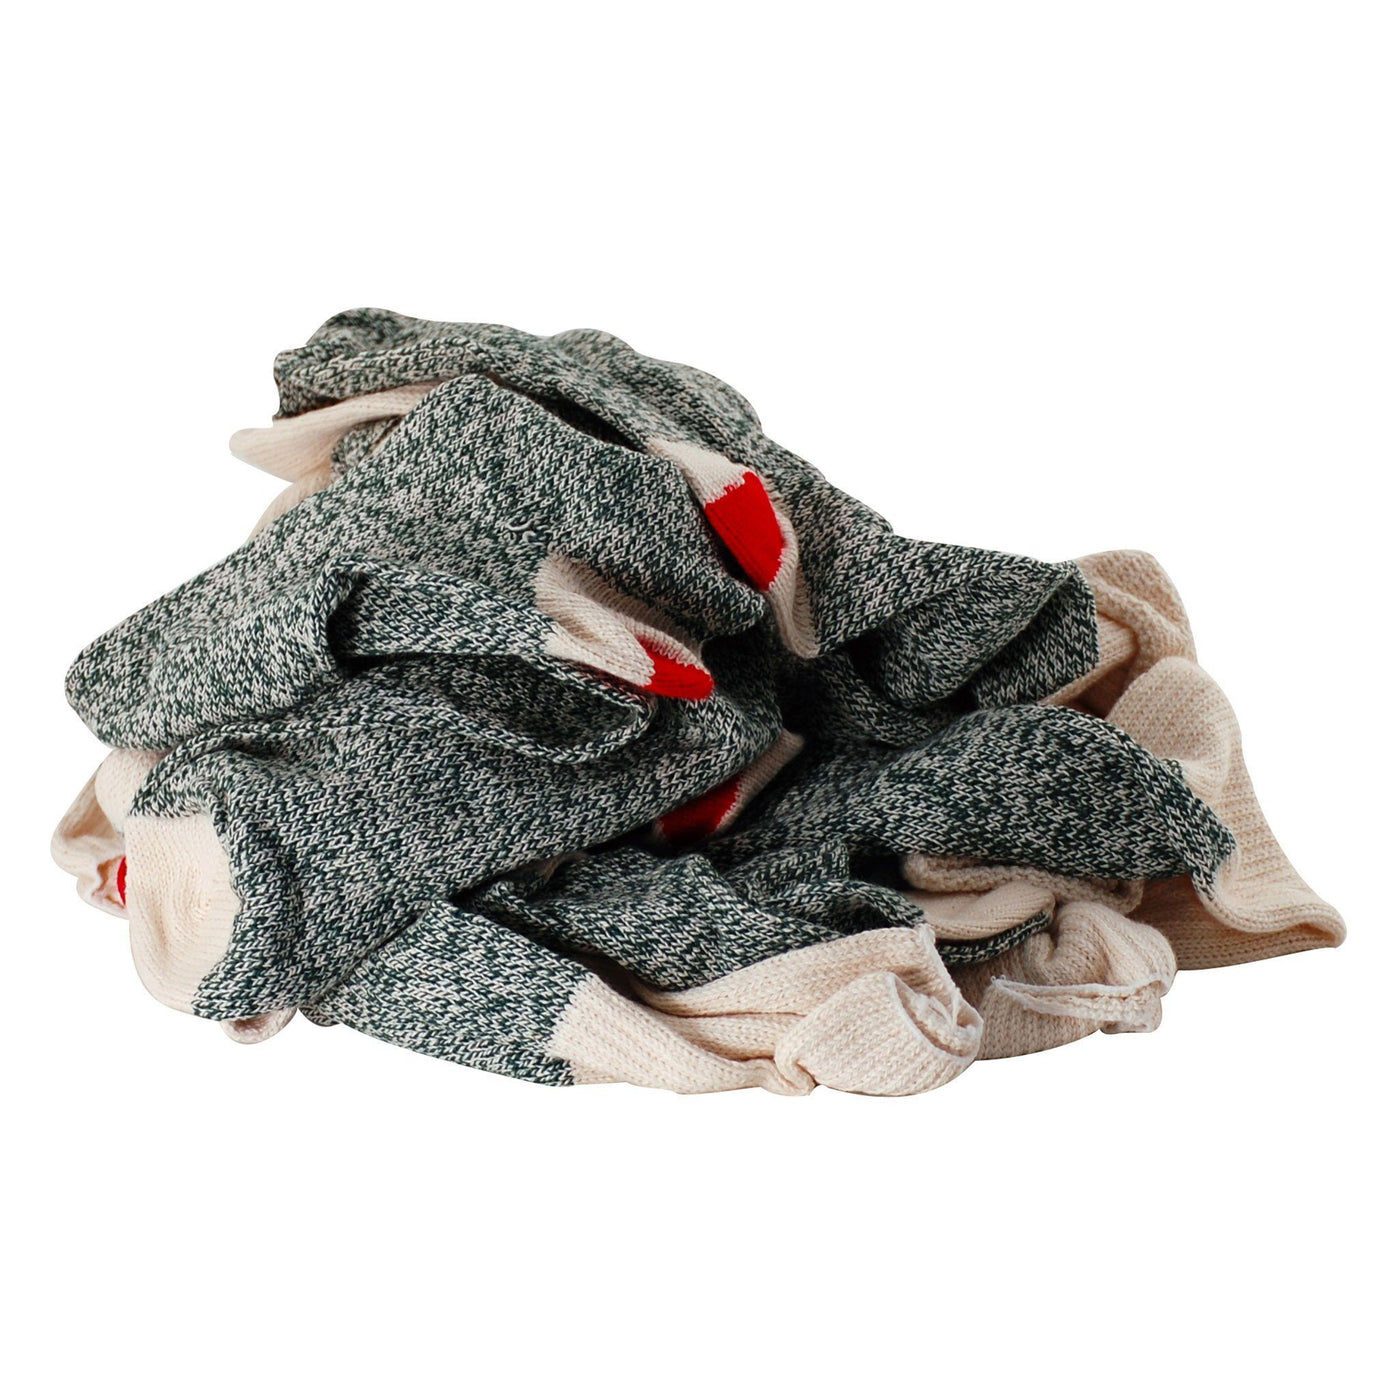 Monkey Socks by the Pound Green No Size - Fox River® Socks